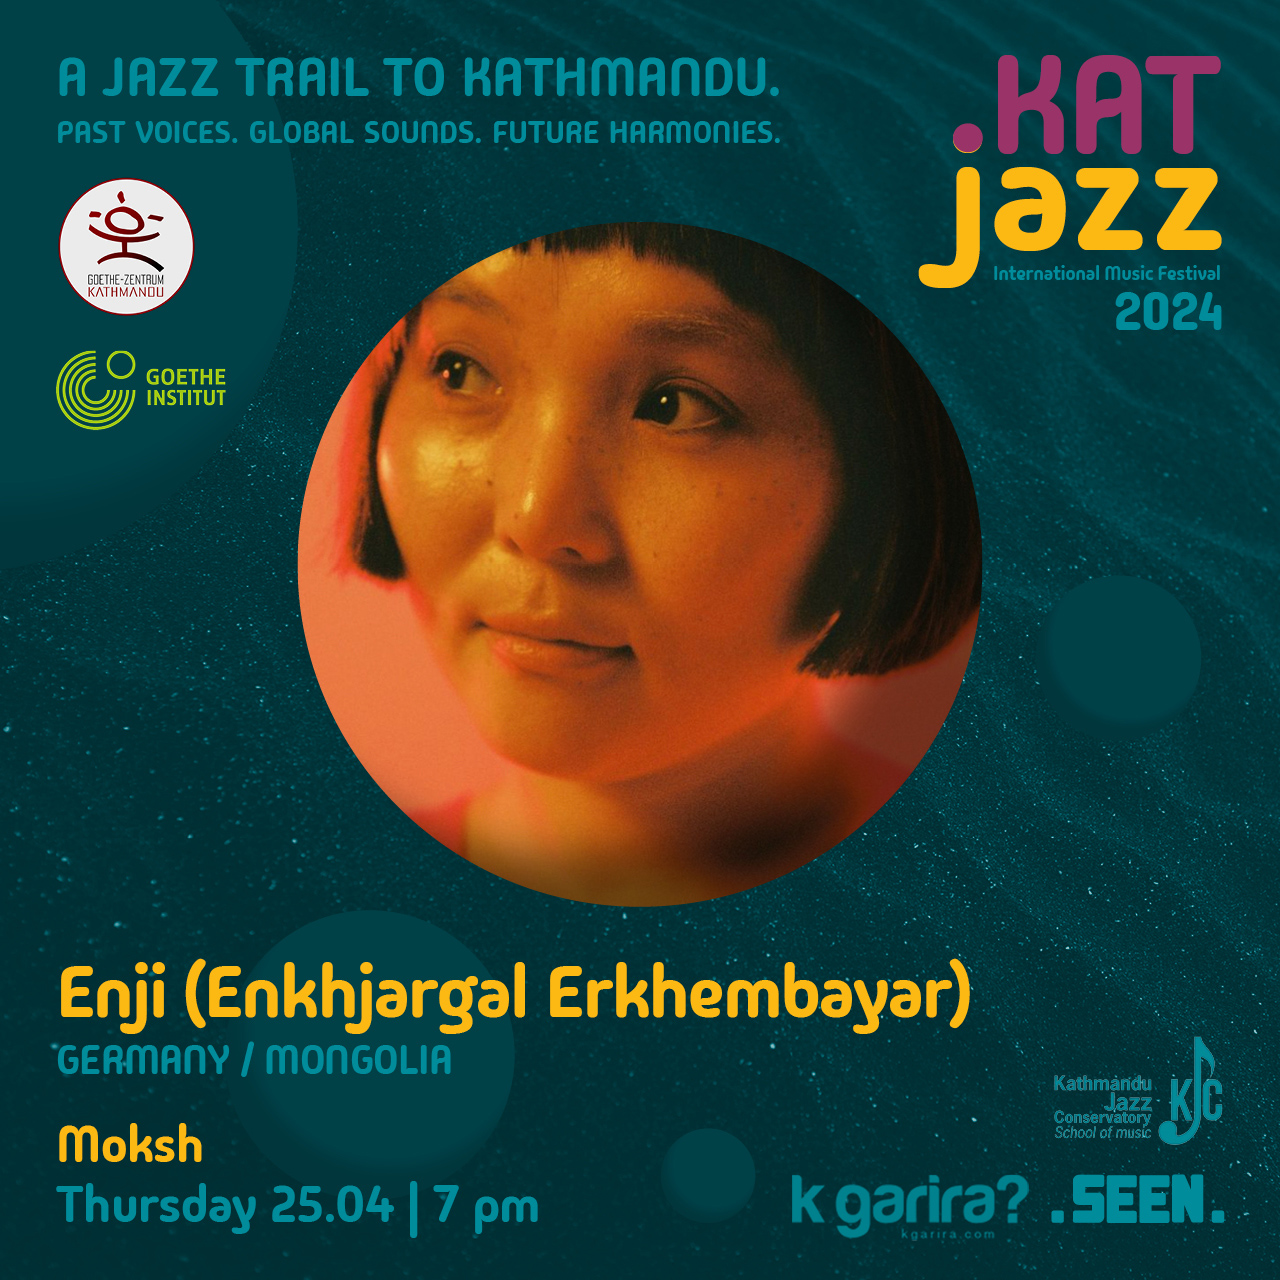 Kat Jazz - Enji (Enkhjargal Erkhembayar)